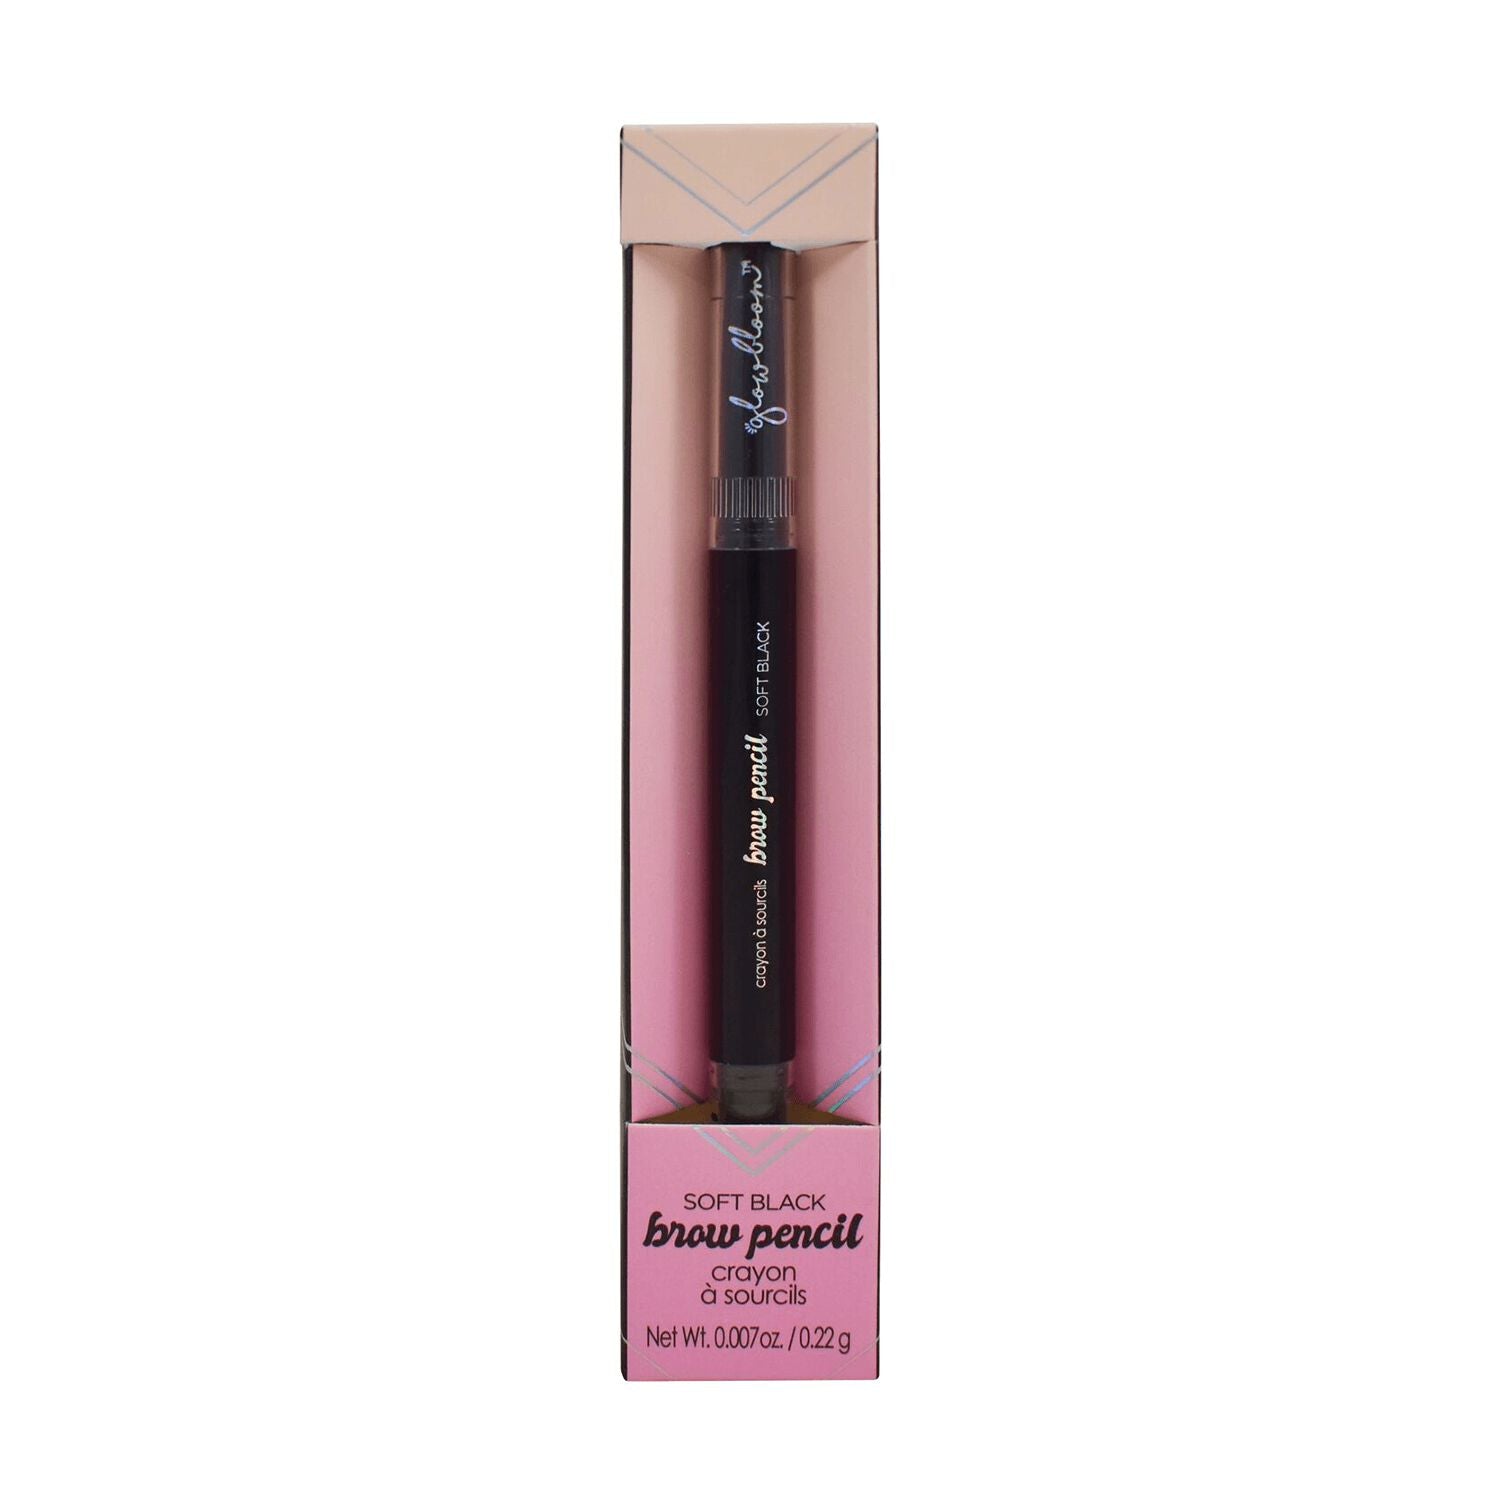 Glowbloom Soft Black Brow Pencil